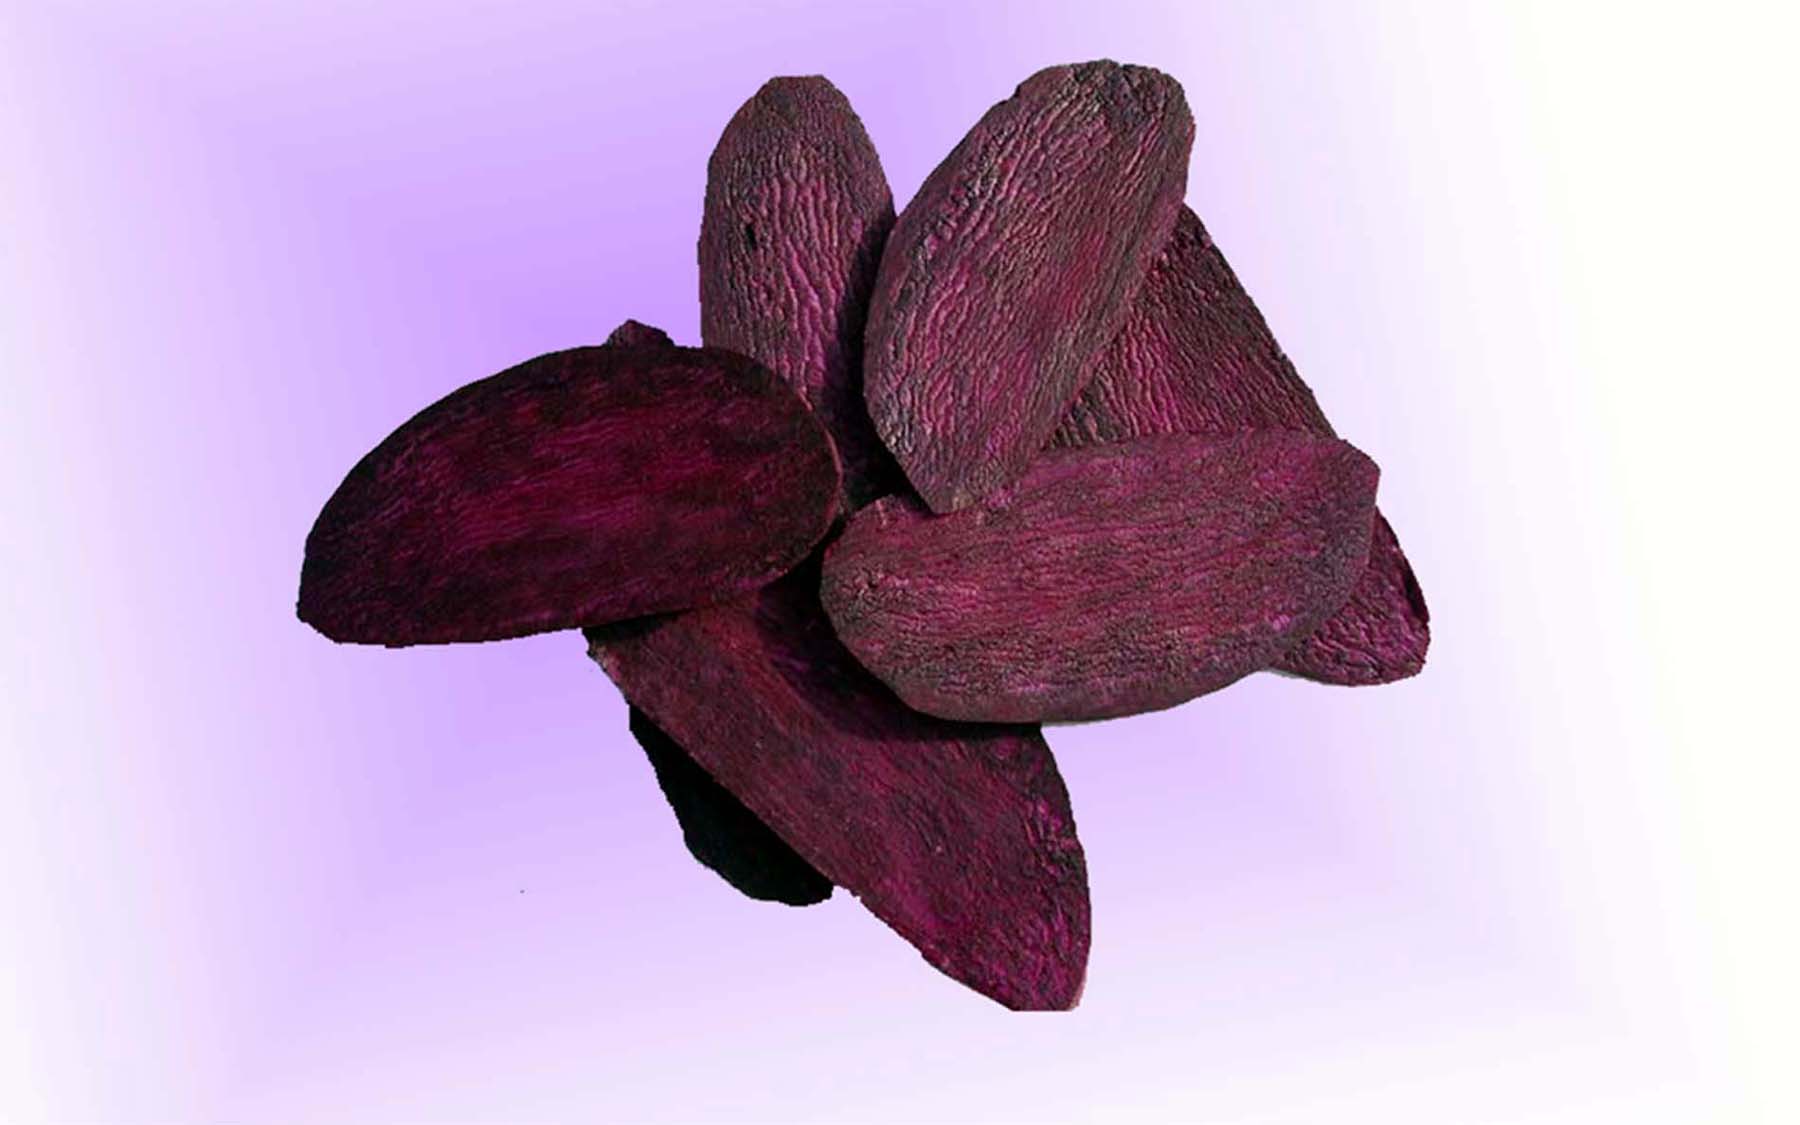 Dried Purple Sweet Potato, leisure food